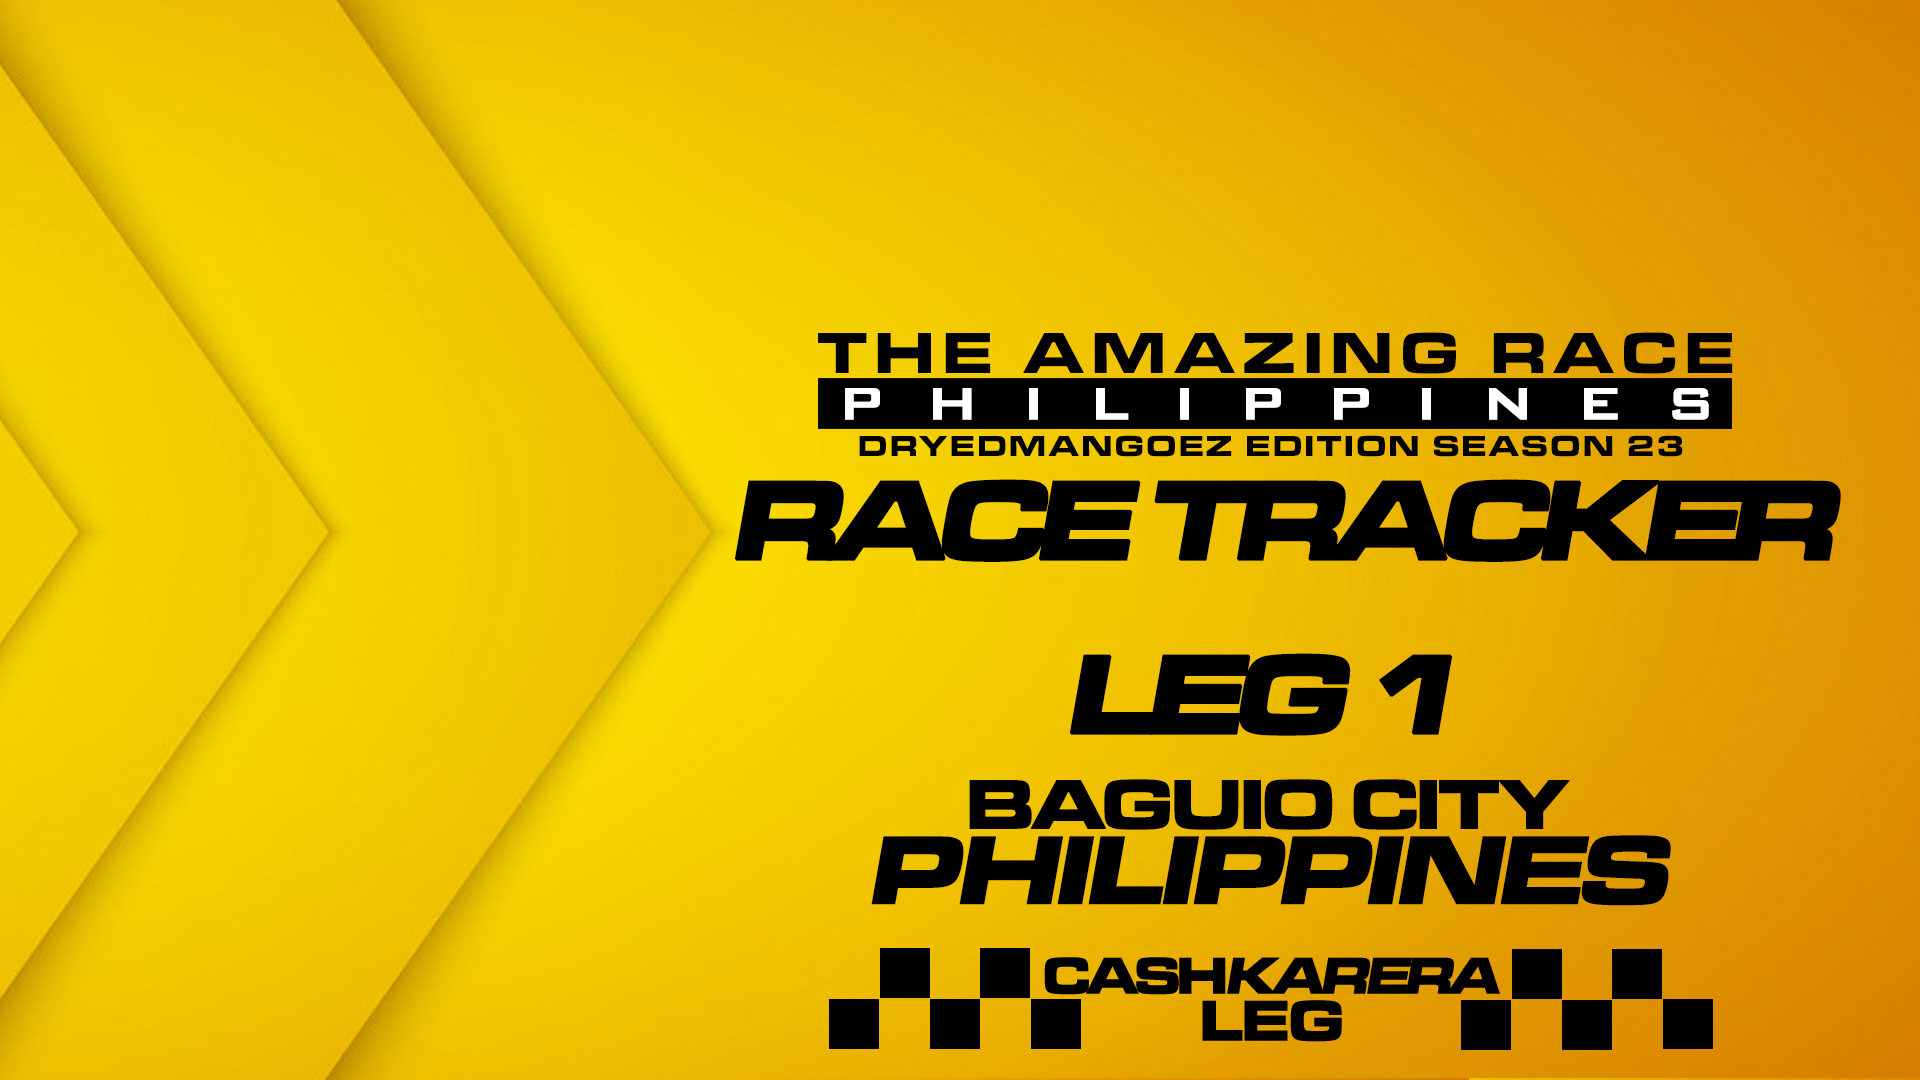 The Amazing Race Philippines: DryedMangoez Edition Season 23 Race Tracker – Leg 1